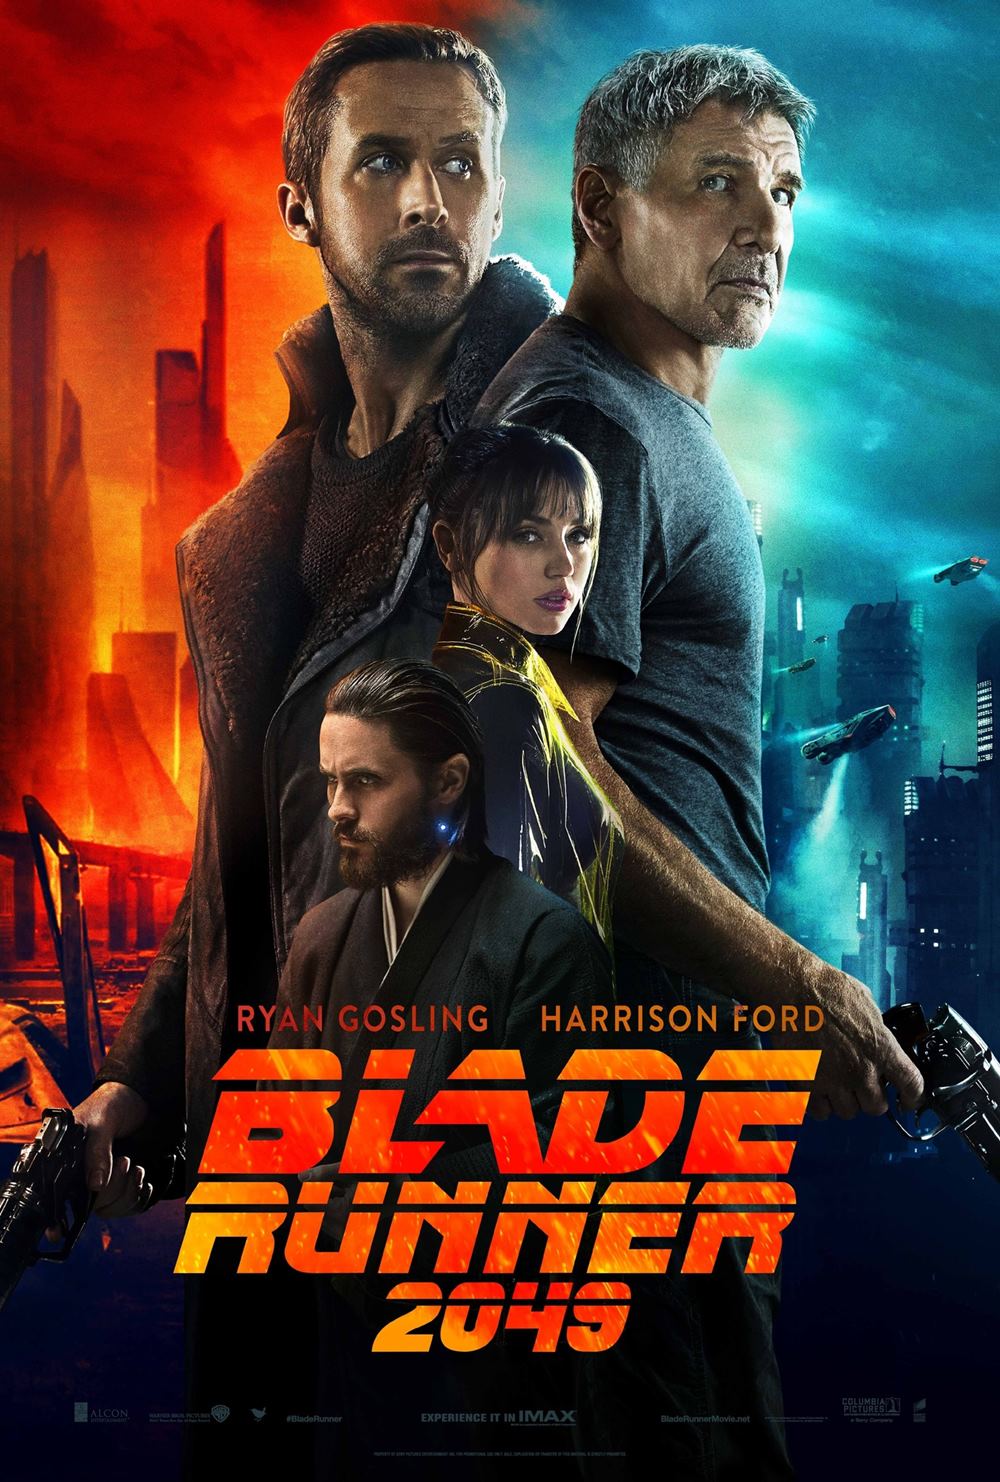 Blade Runner 2049 20h00 3/9 trên Box Hits